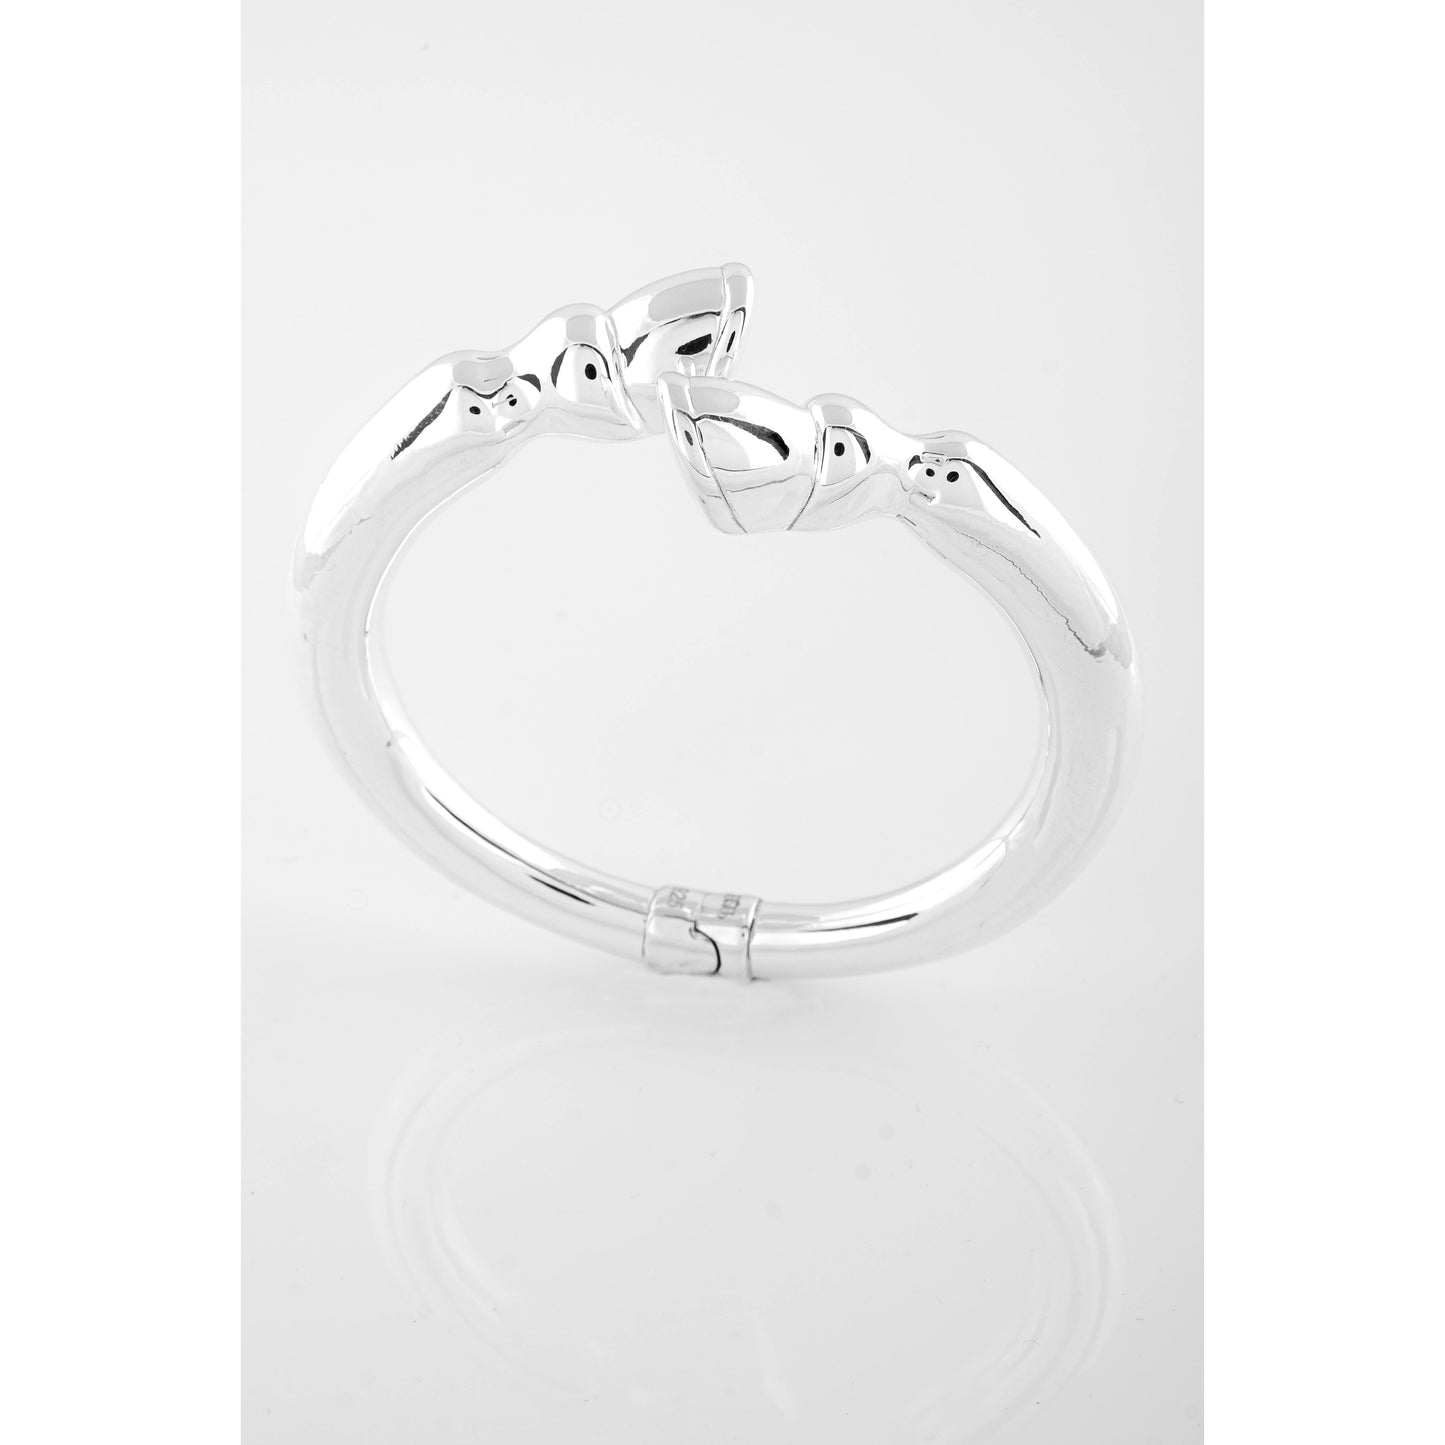 Silver bracelet with cat design.